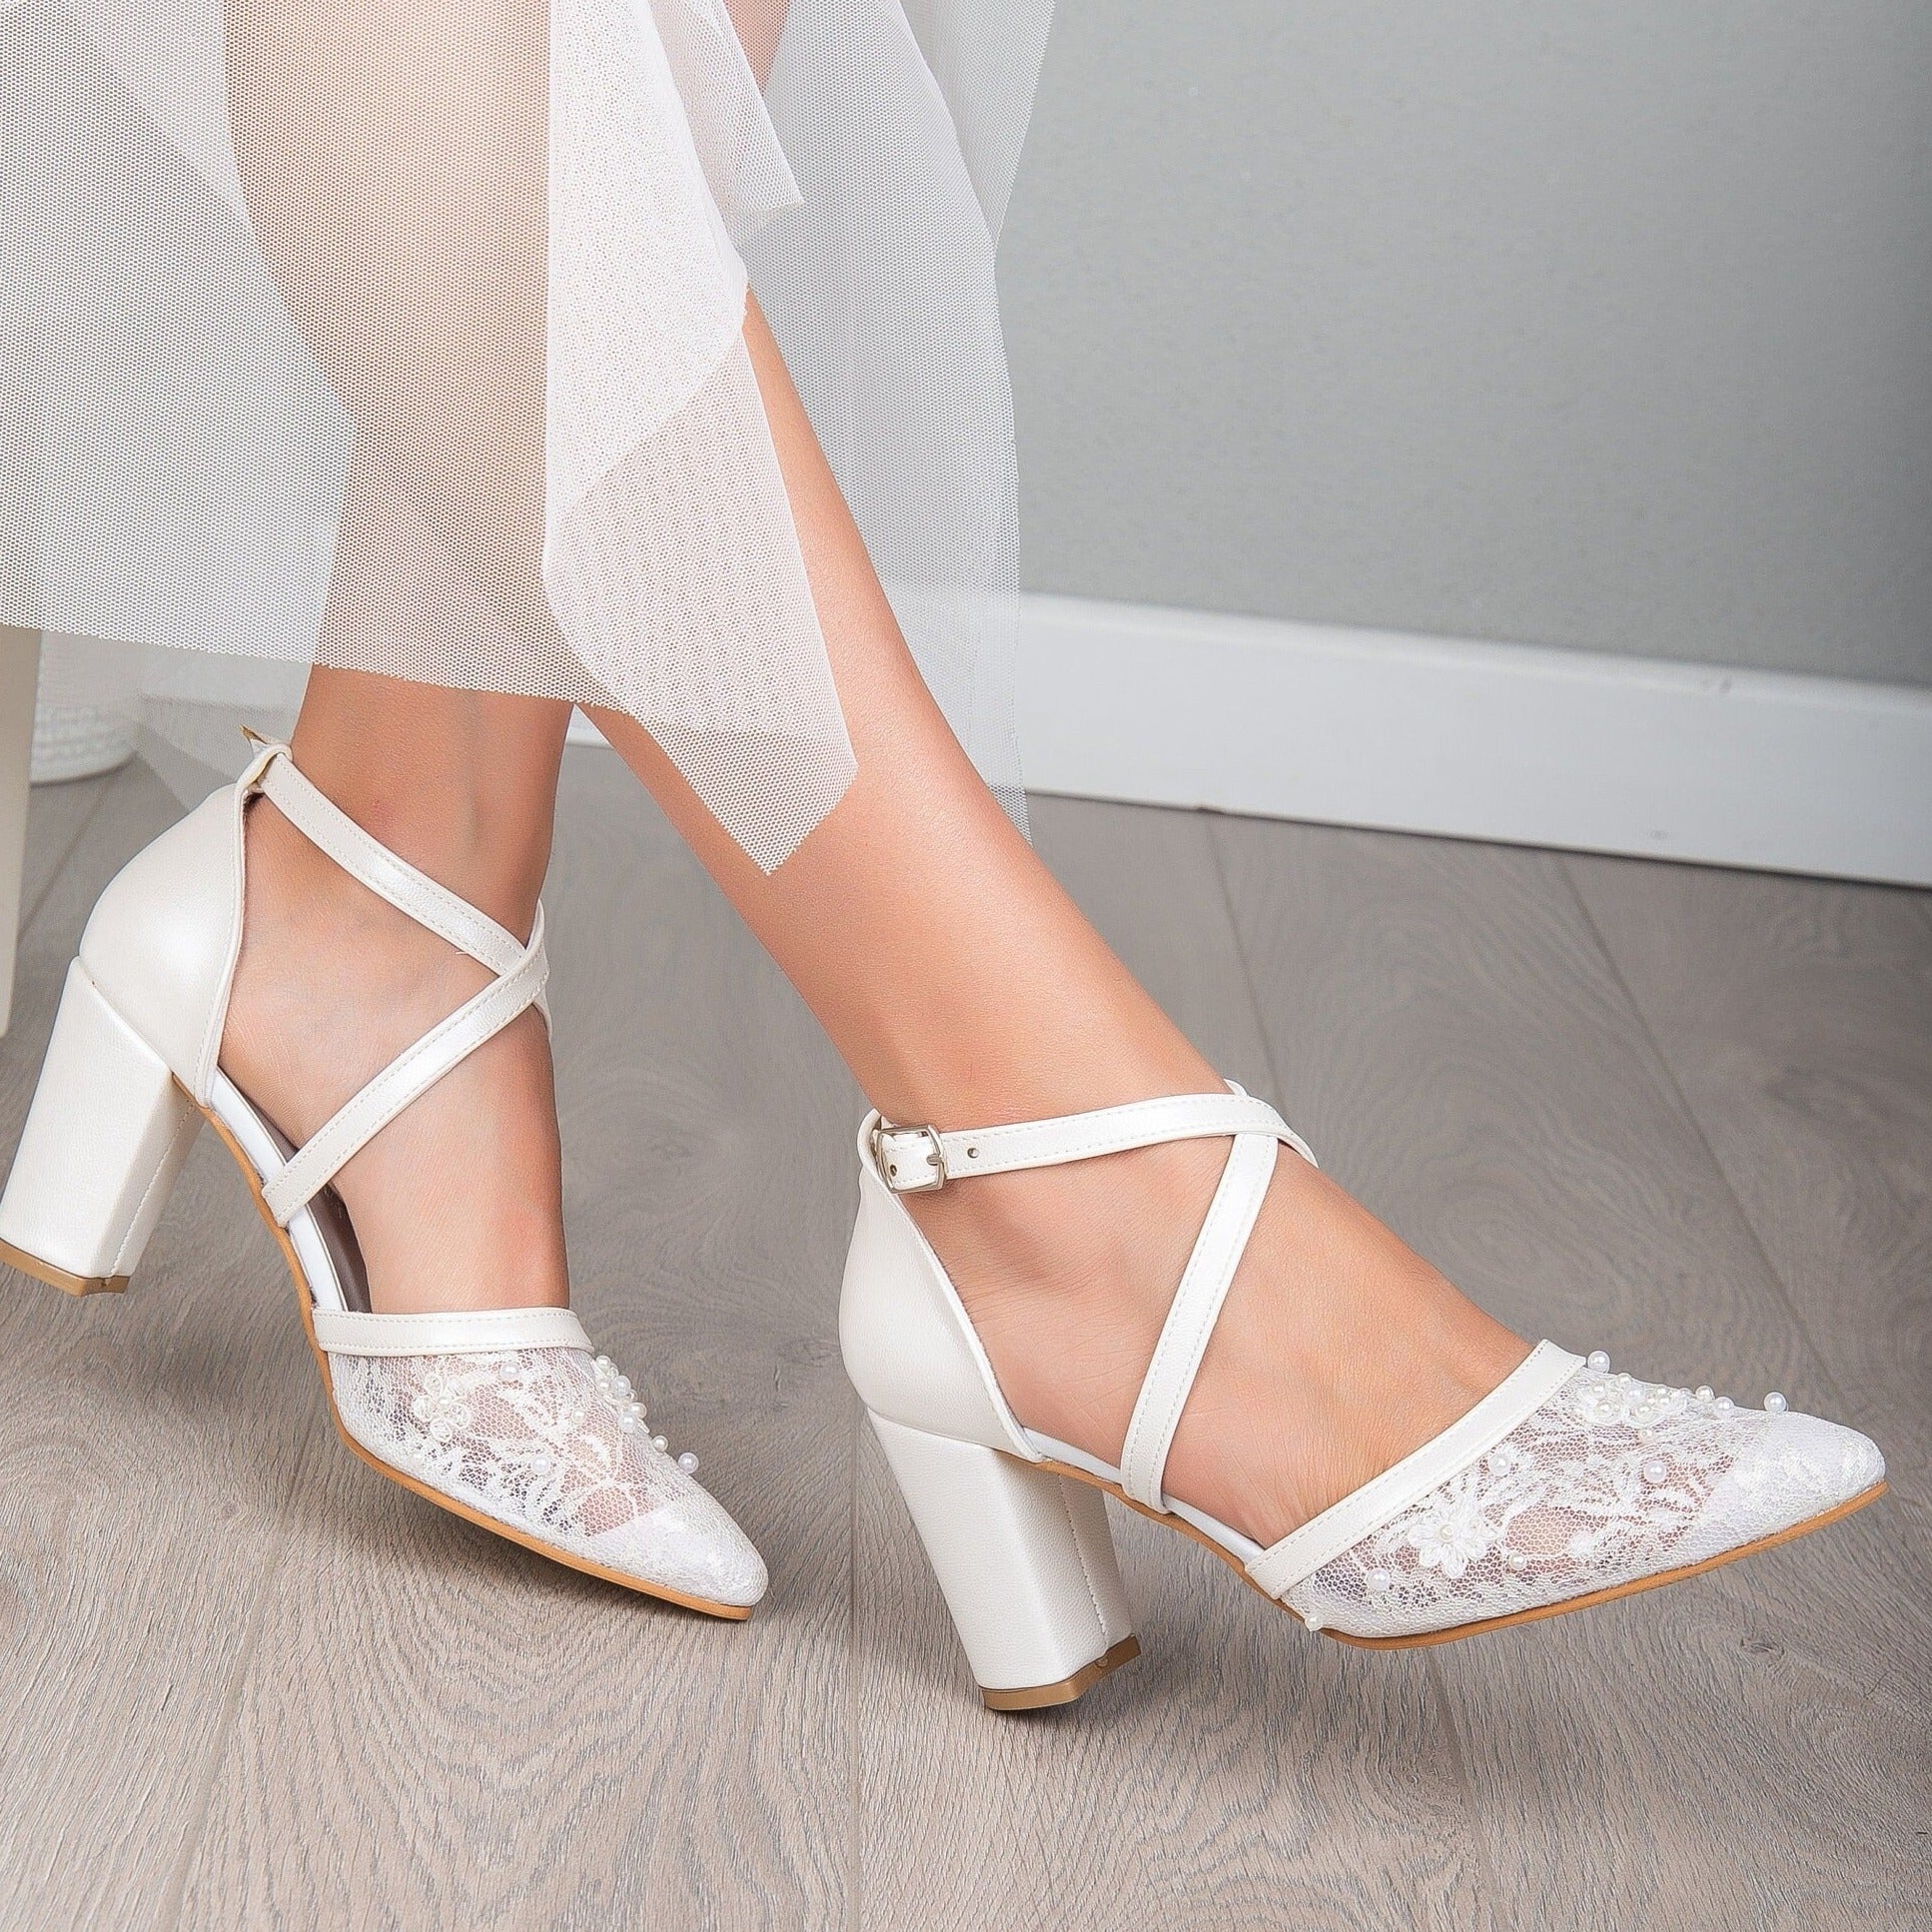 Blush Block Heel Sandals With Pearls Outdoor Wedding